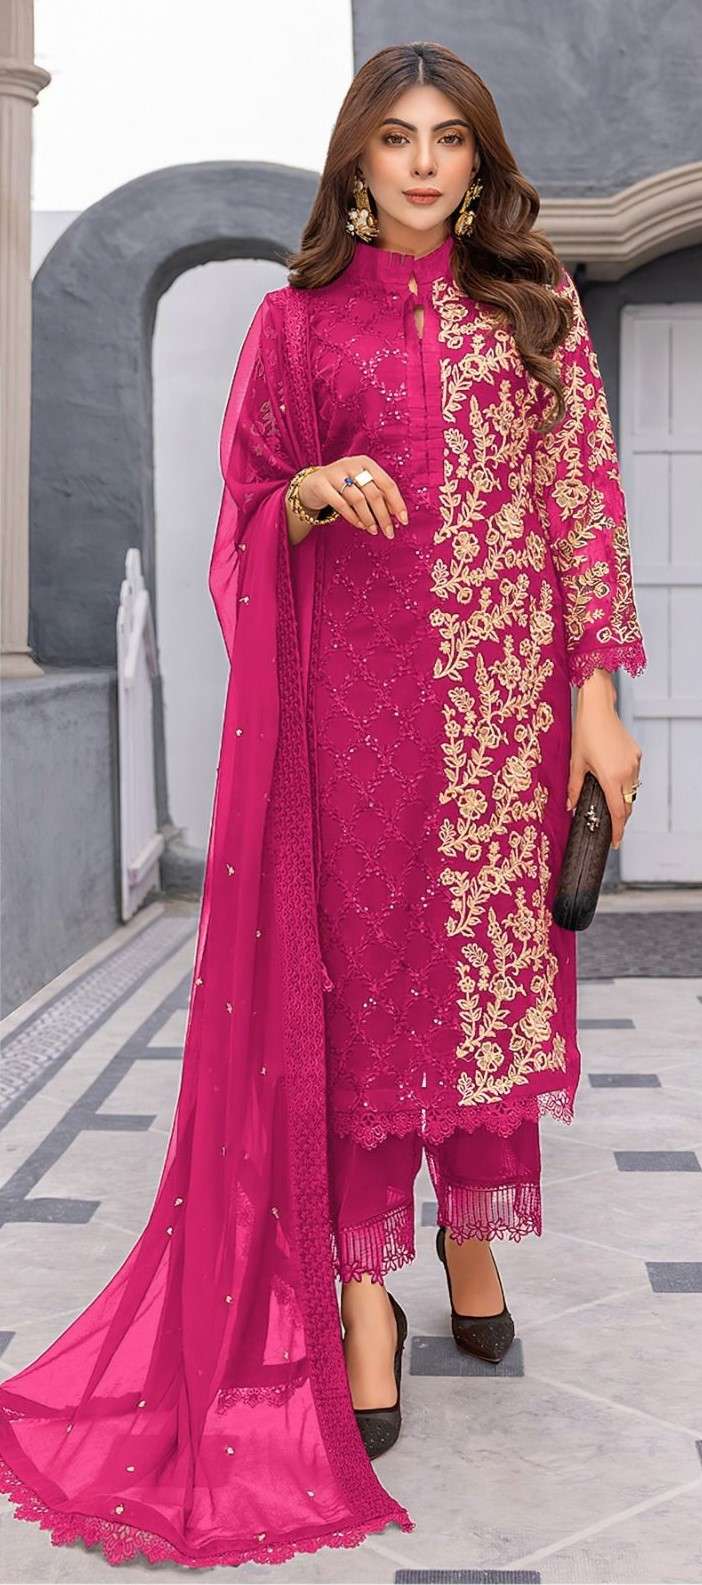 al khushbu aadila vol-1 georgette designer pakistani salwar suits wholesale price surat gujarat